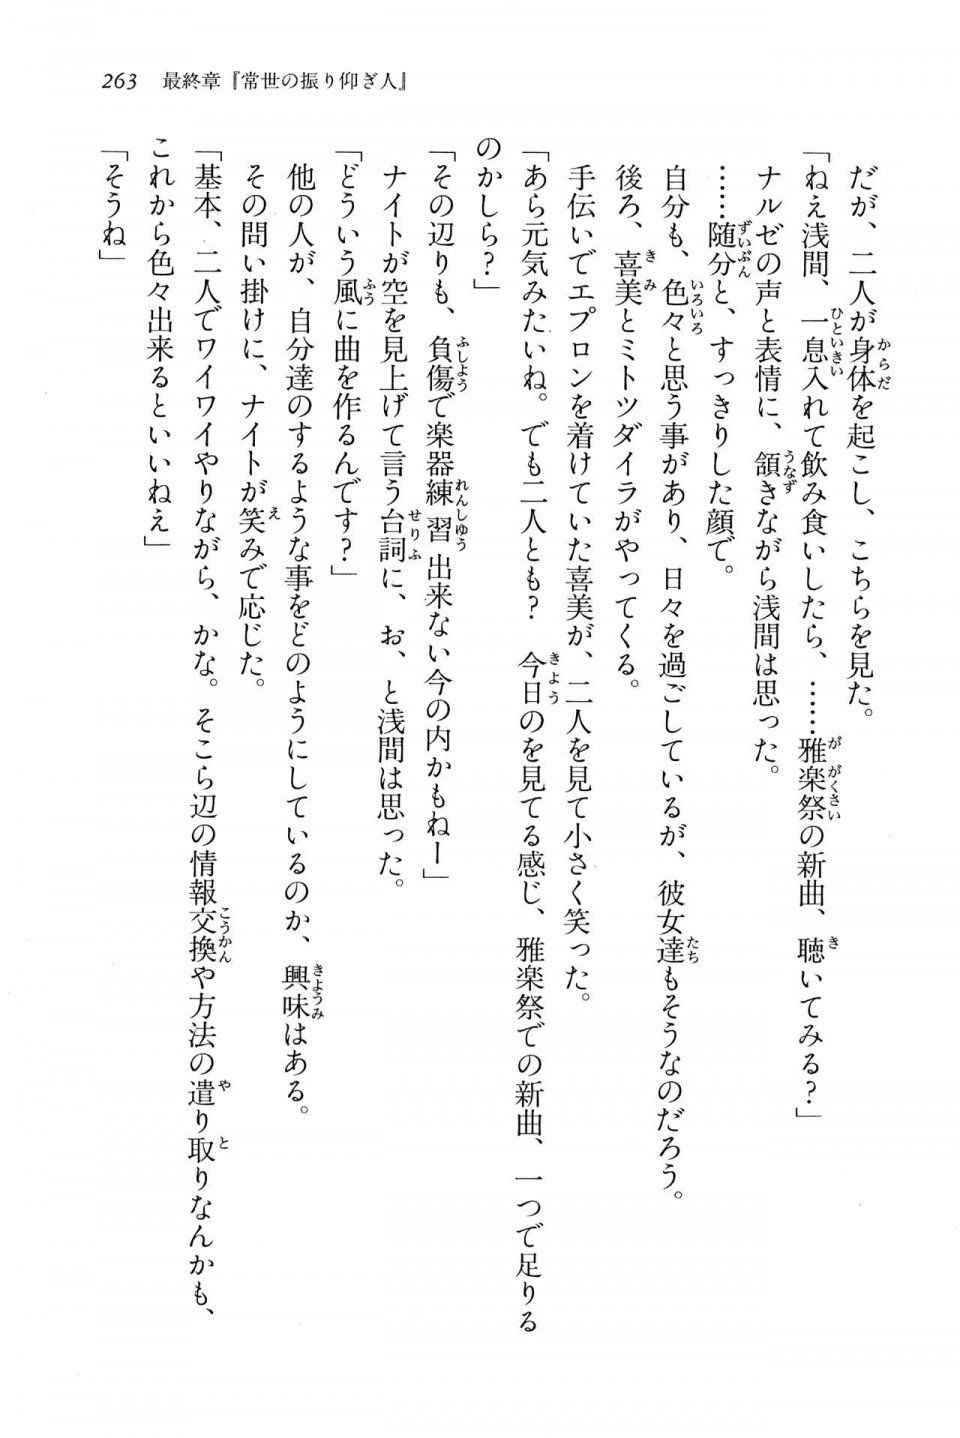 Kyoukai Senjou no Horizon BD Special Mininovel Vol 6(3B) - Photo #267